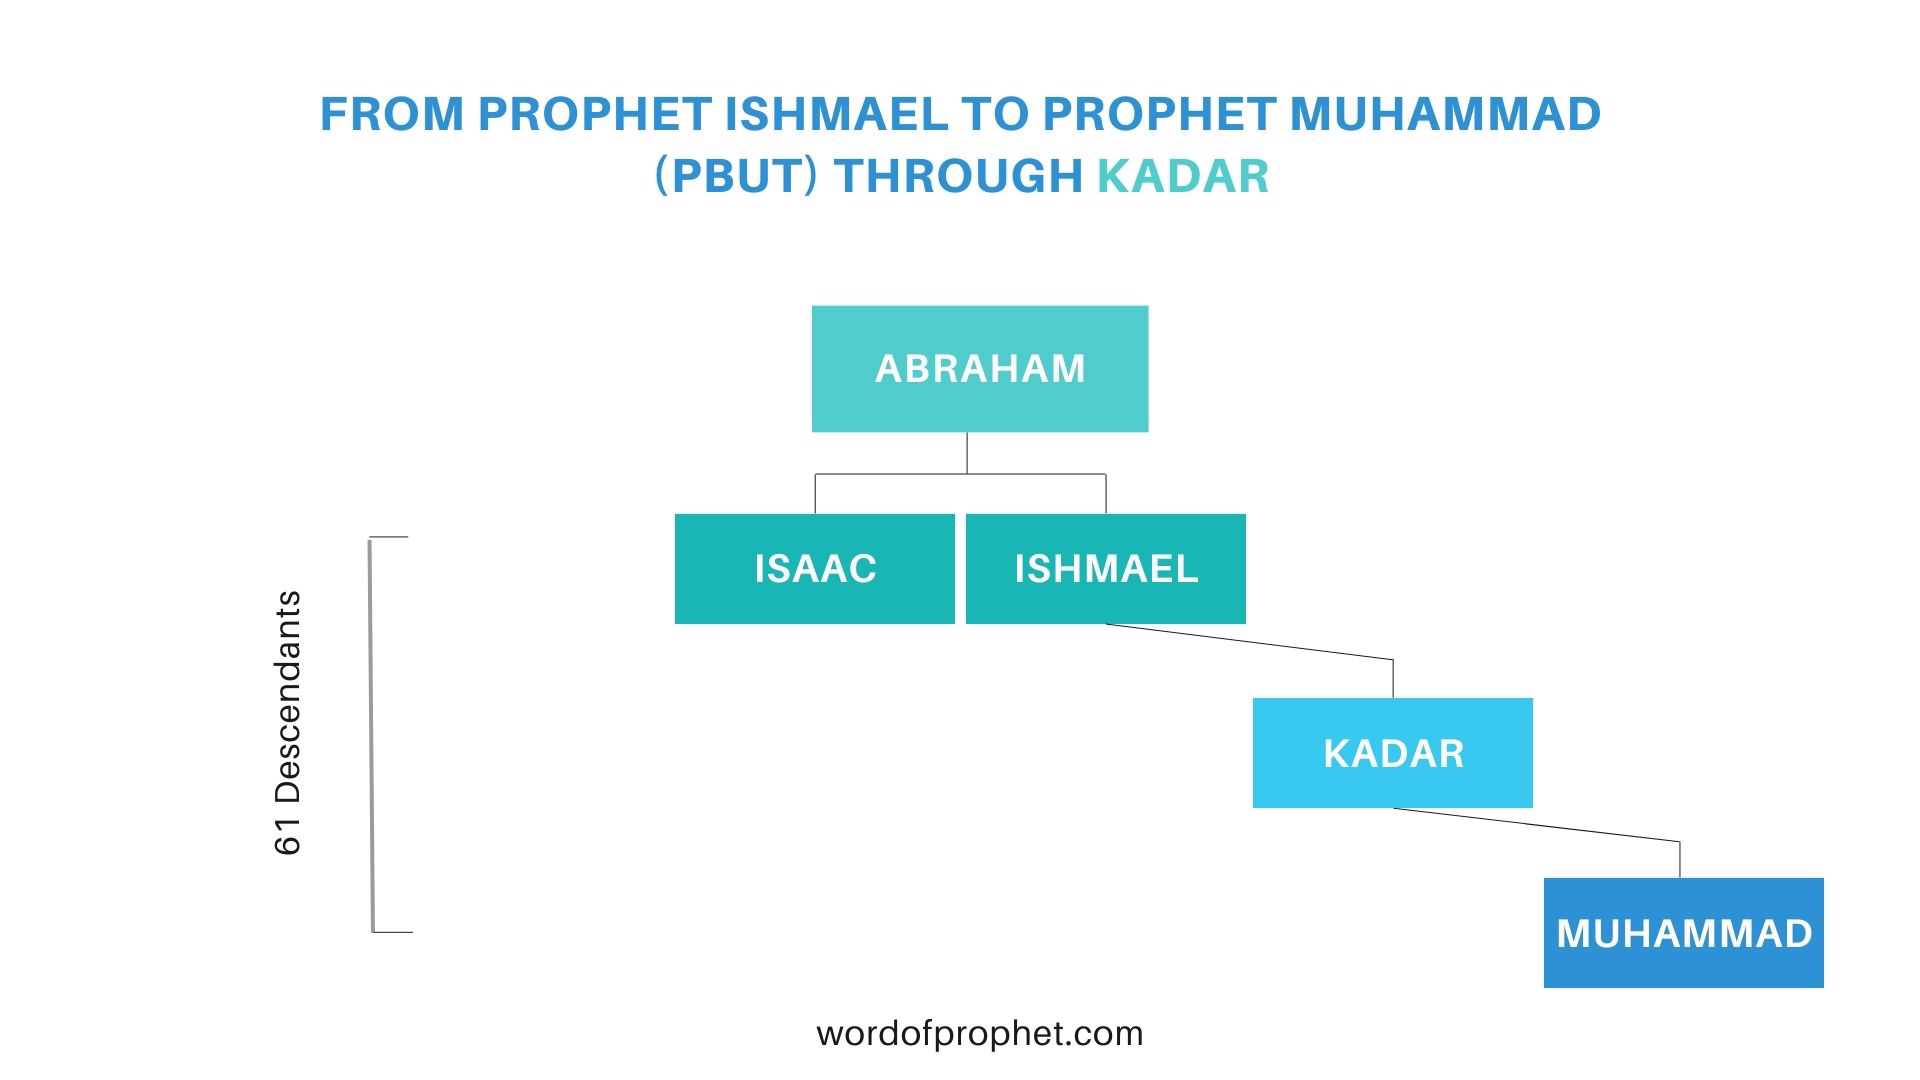 From prophet Ishmael to Prophet muhammad (pbut) through kadar